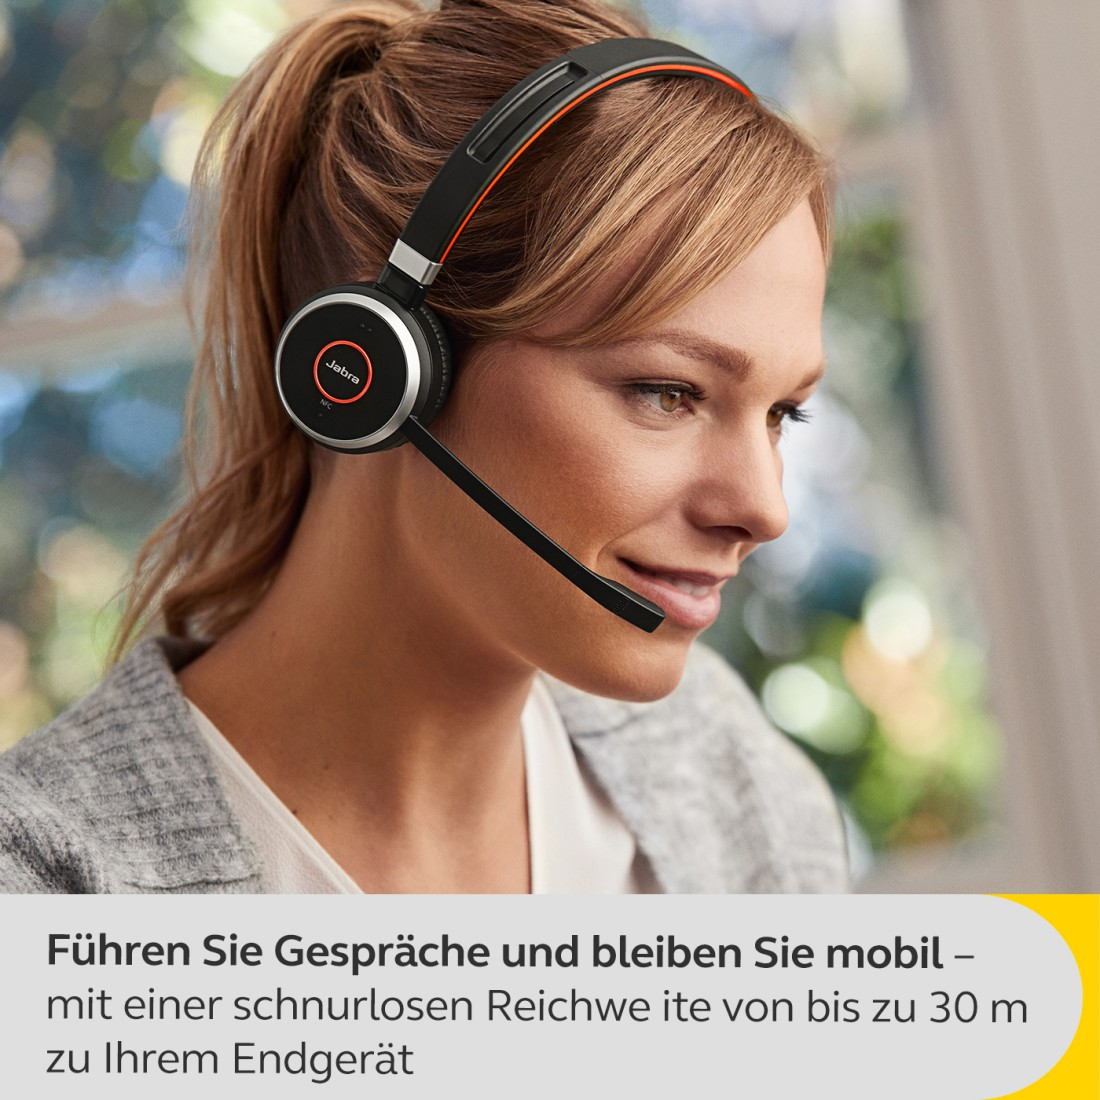 On-ear Bluetooth JABRA Schwarz SE, Headset 65 Evolve